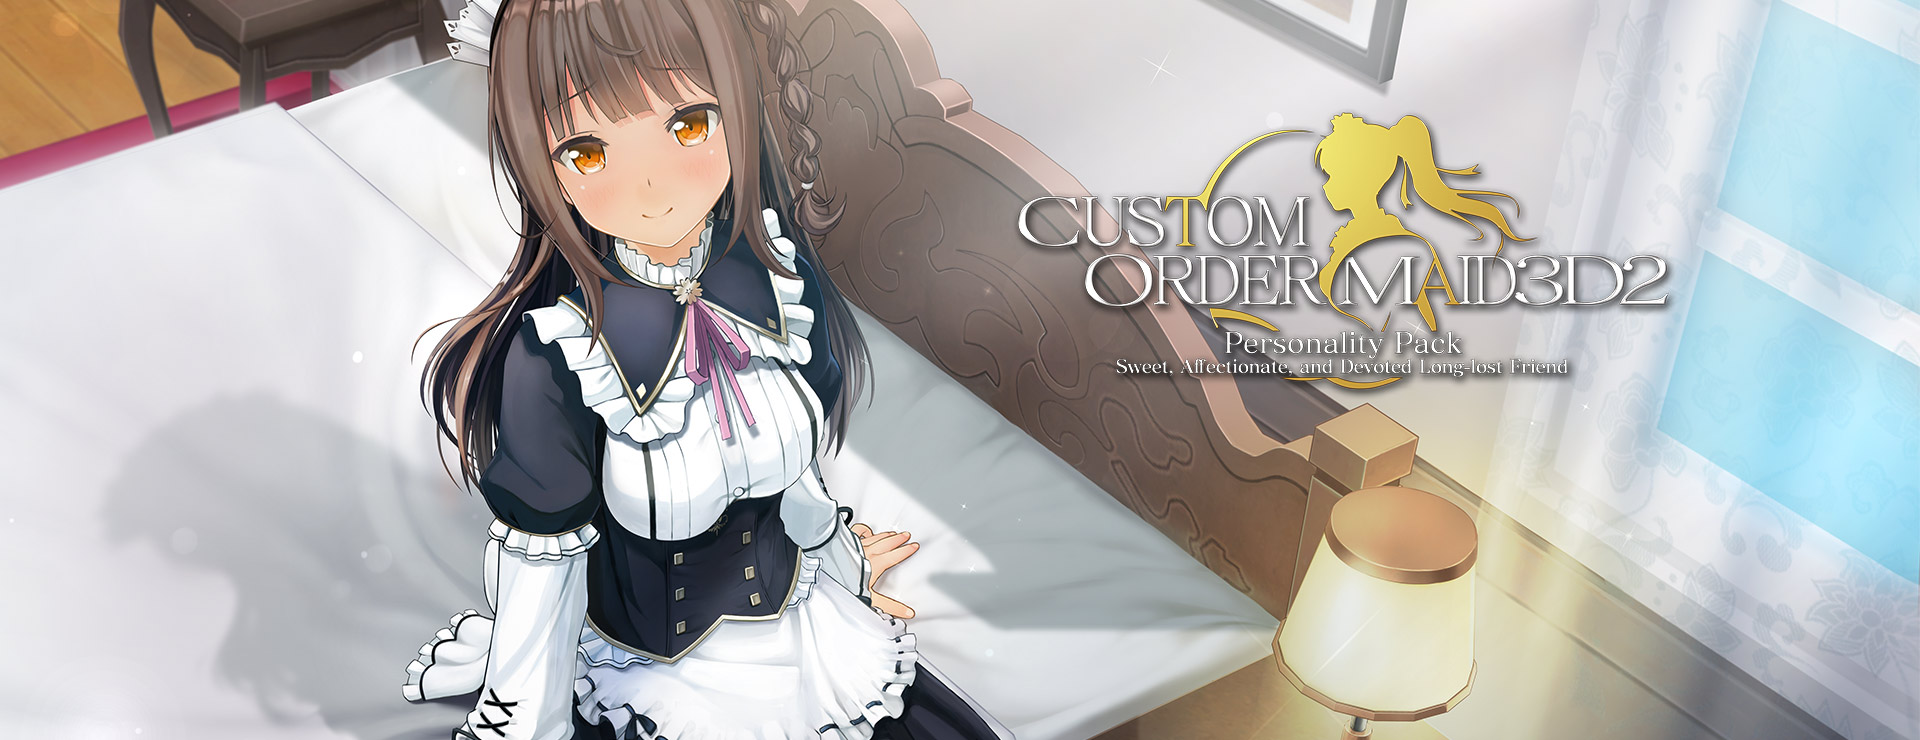 Custom Order Maid 3D 2 - Sweet, Affectionate, and Devoted Long-Lost Friend DLC - シミュレーション ゲーム